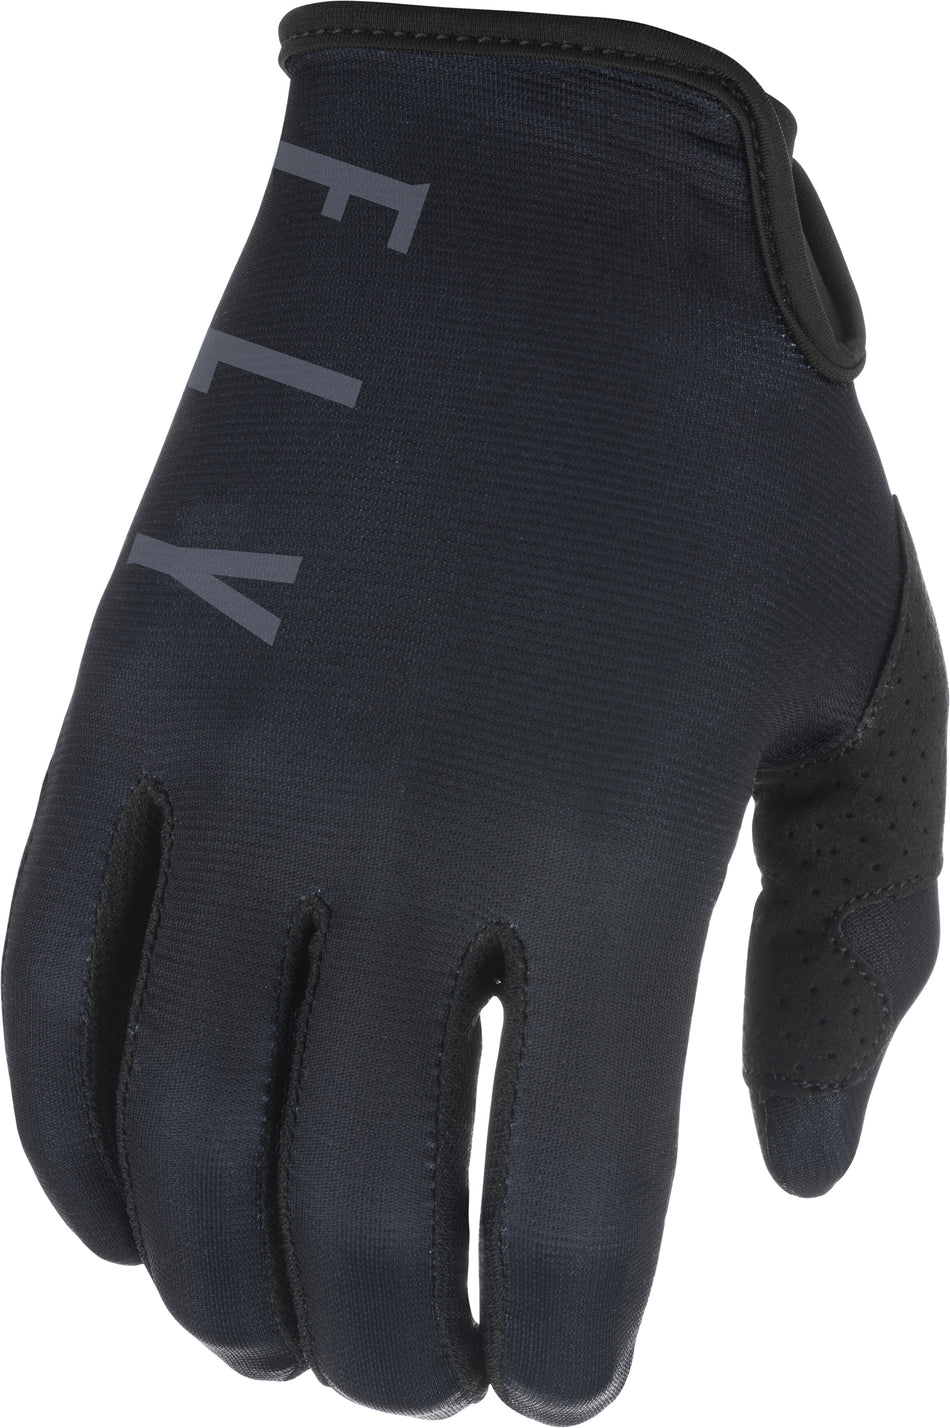 FLY RACING Lite Gloves Black/Grey Sz 10 374-71010